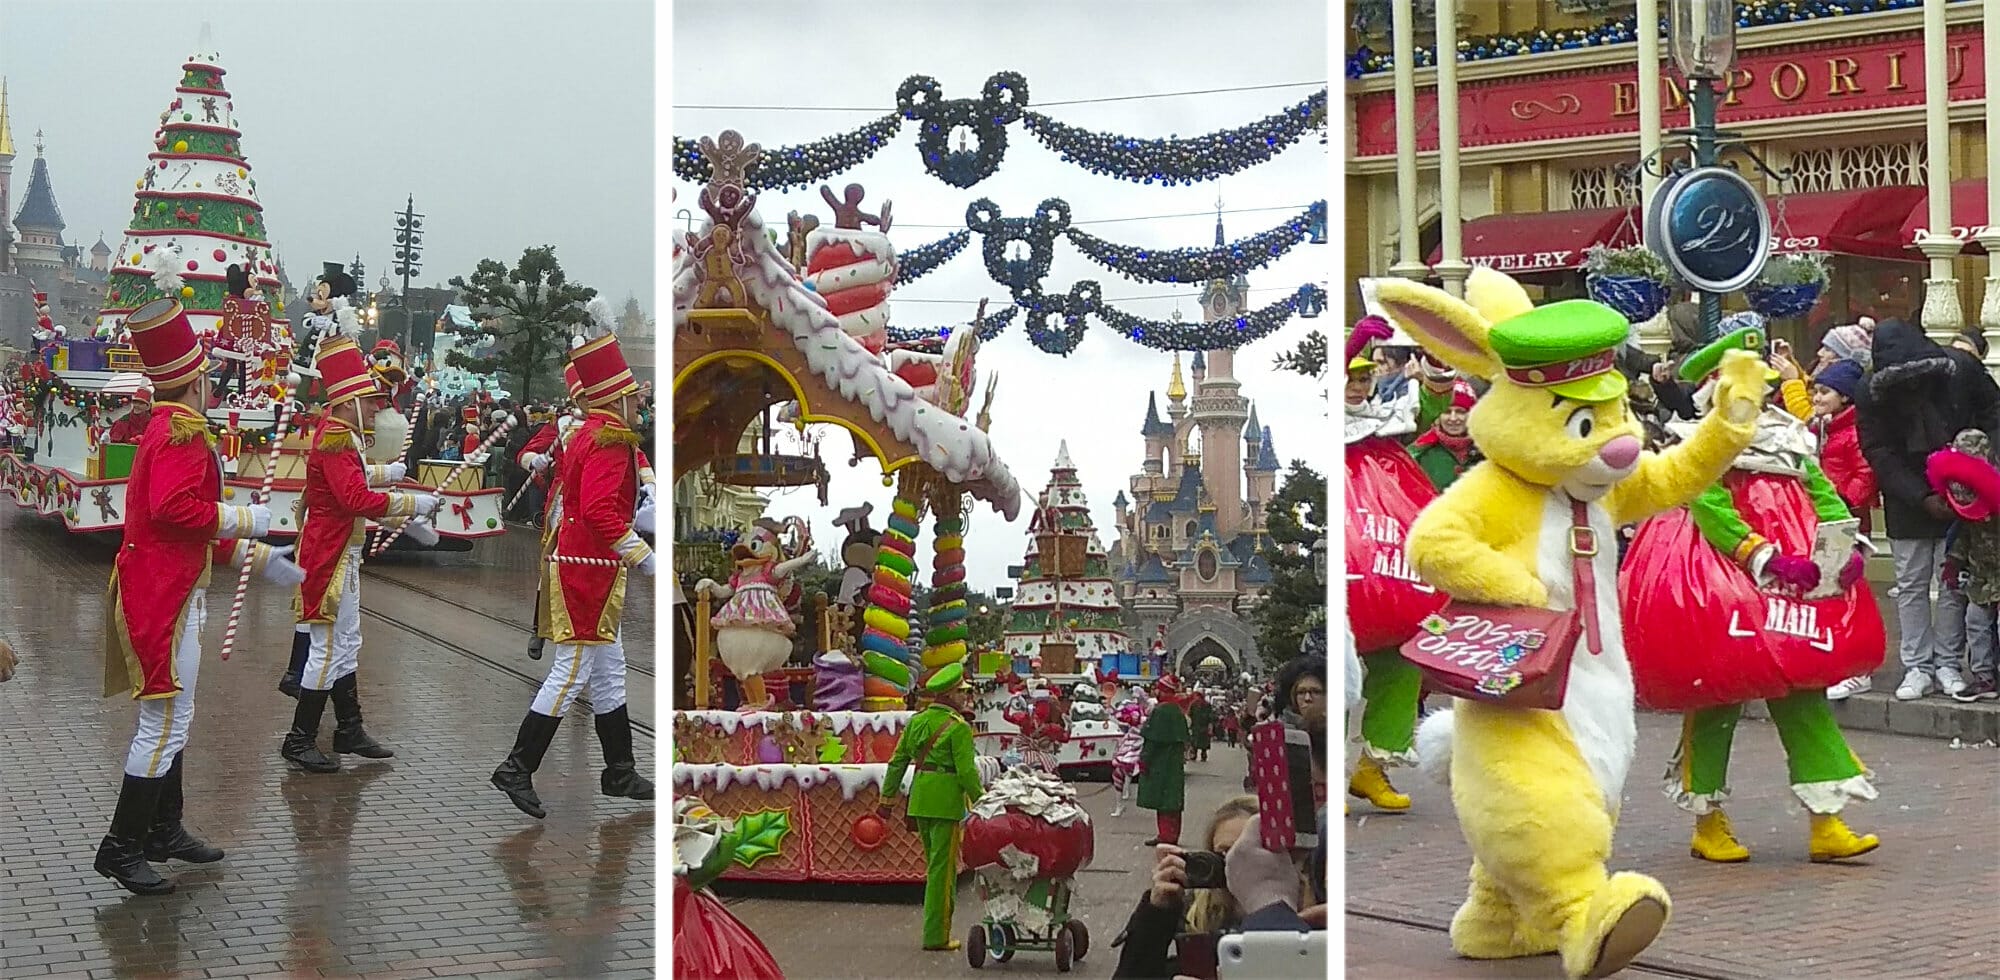 Disneyland Paris at Christmas Review: Should You Make a Christmas Trip to DLP? via @girlsgonelondon